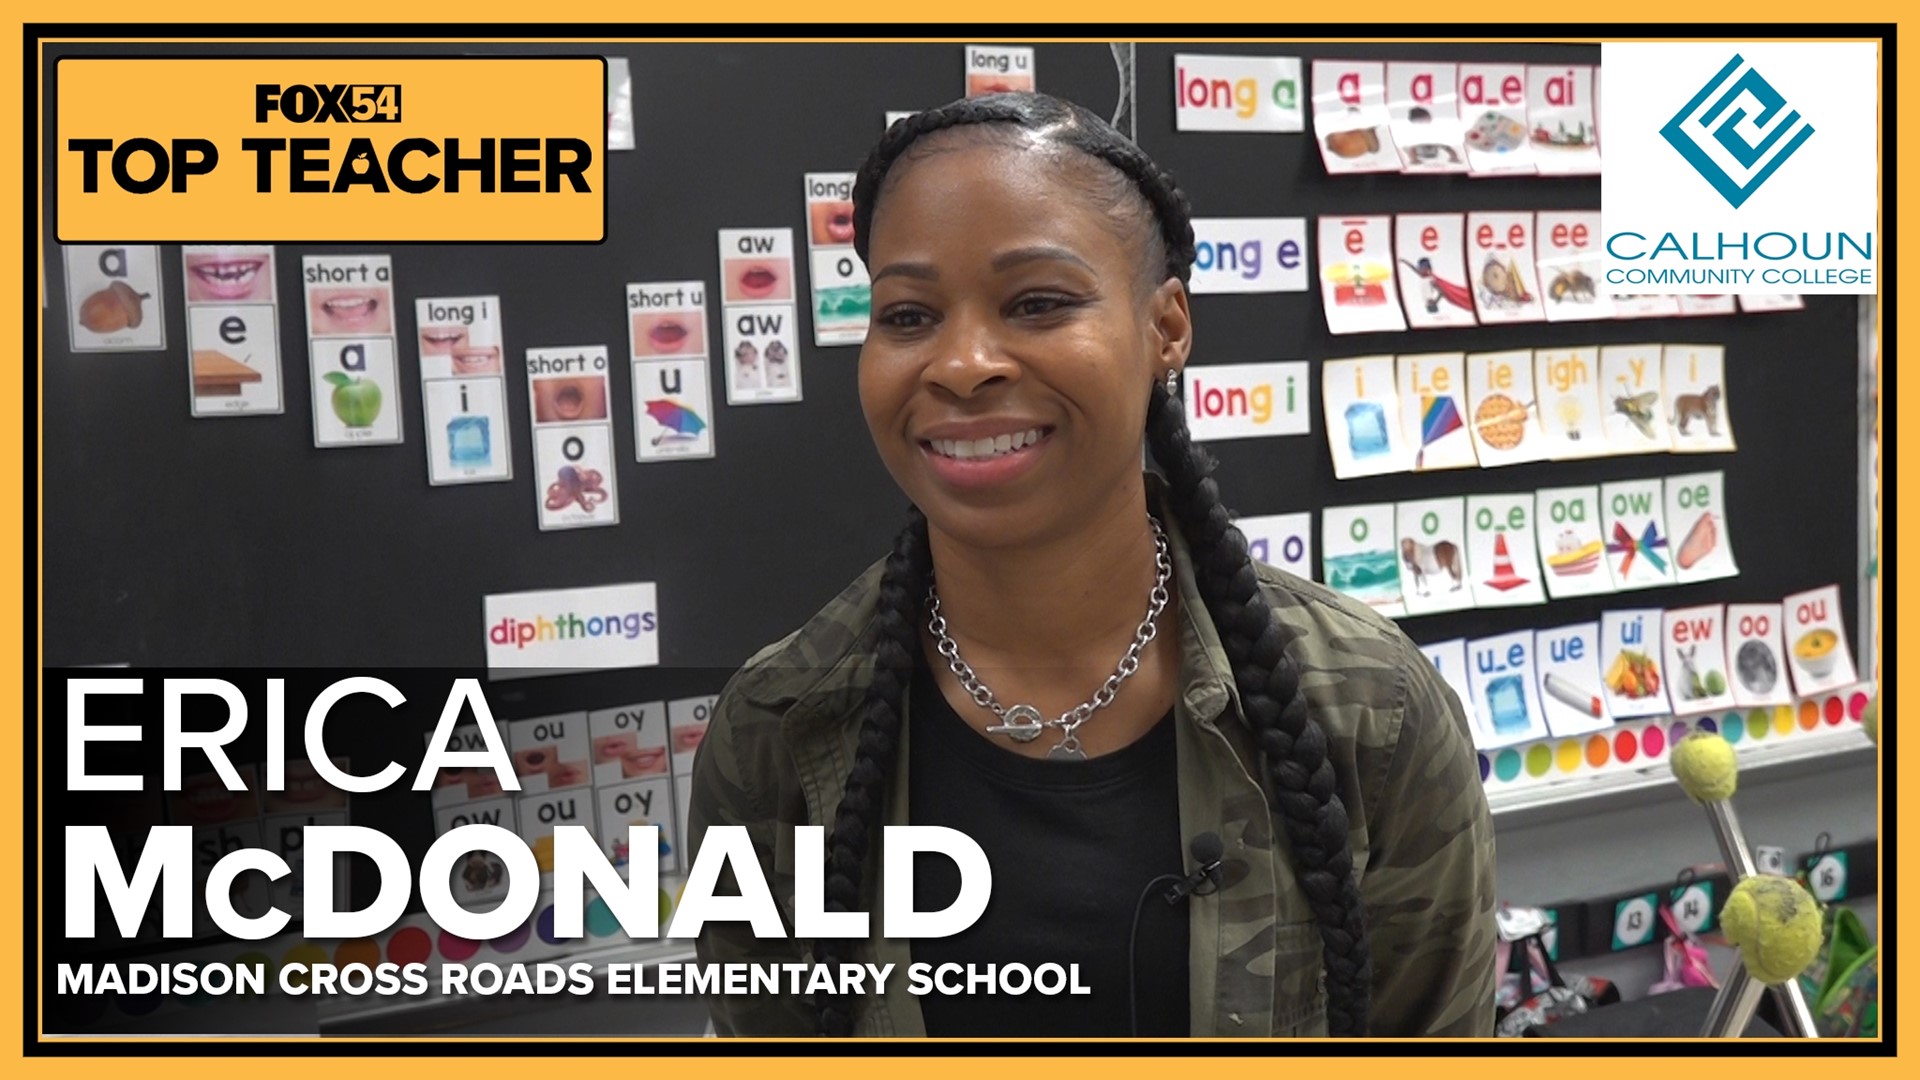 This week's top teacher is Erica McDonald from Madison Cross Roads Elementary School!